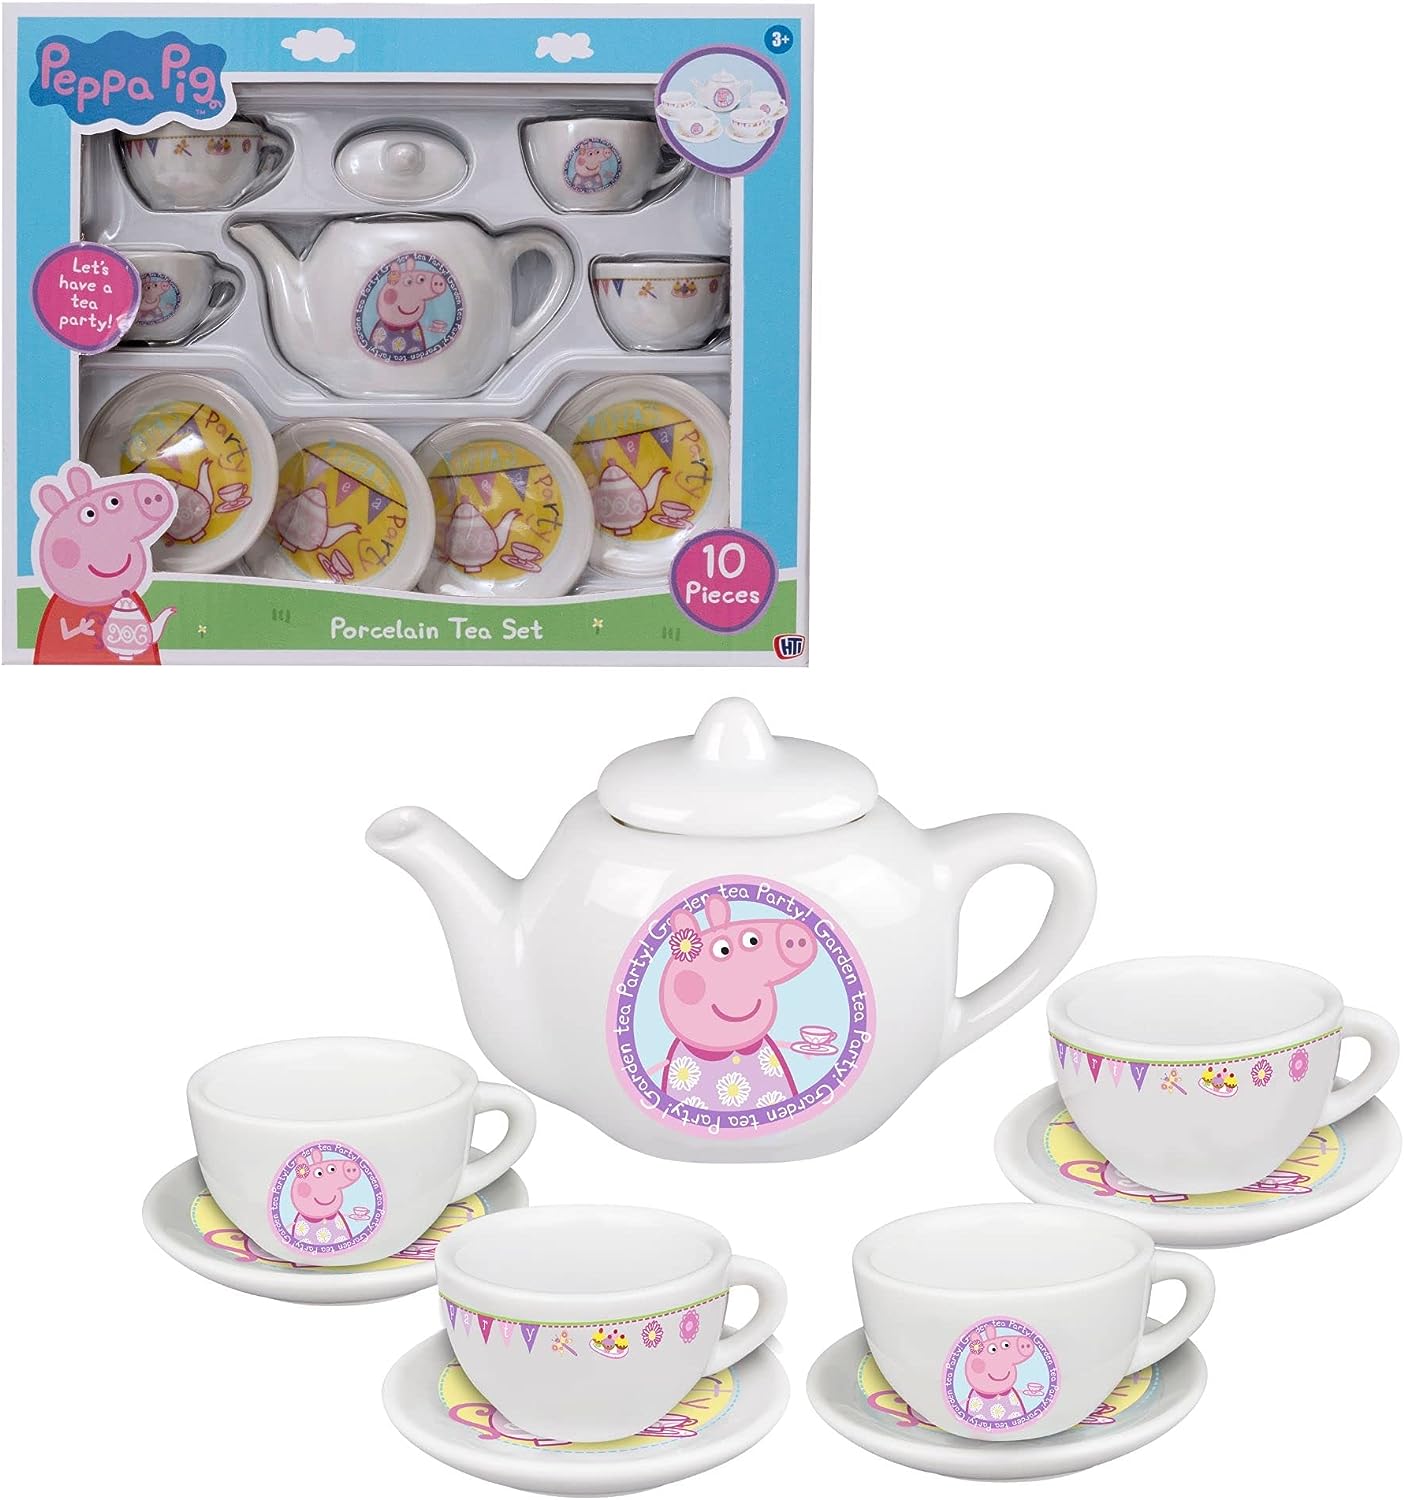 Photos - Educational Toy Peppa Pig Porcelain Tea Set 